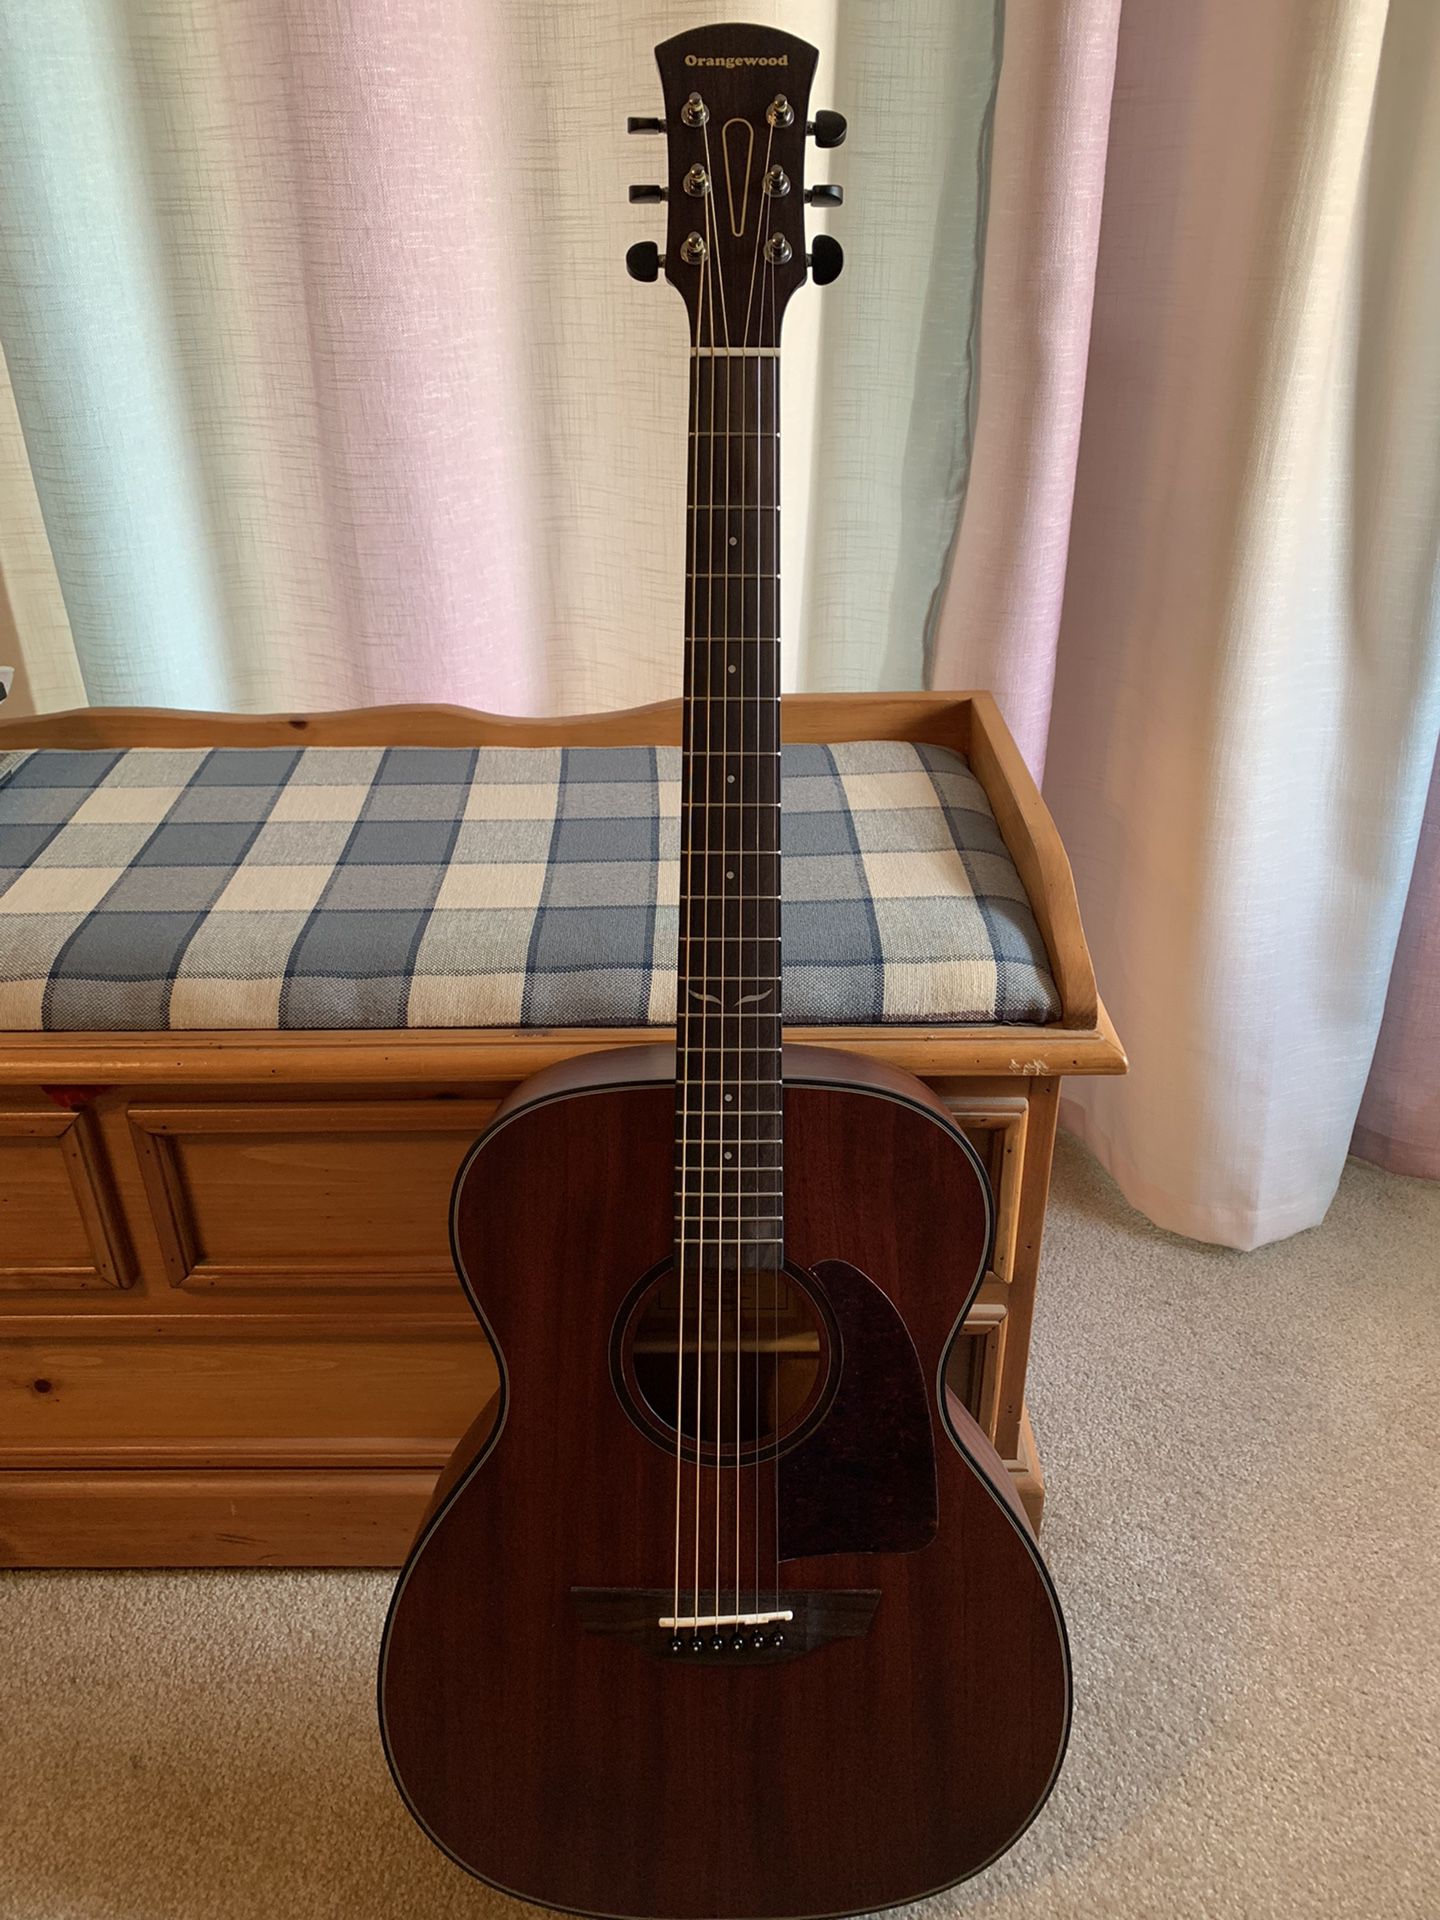 Orangewood Acoustic Guitar